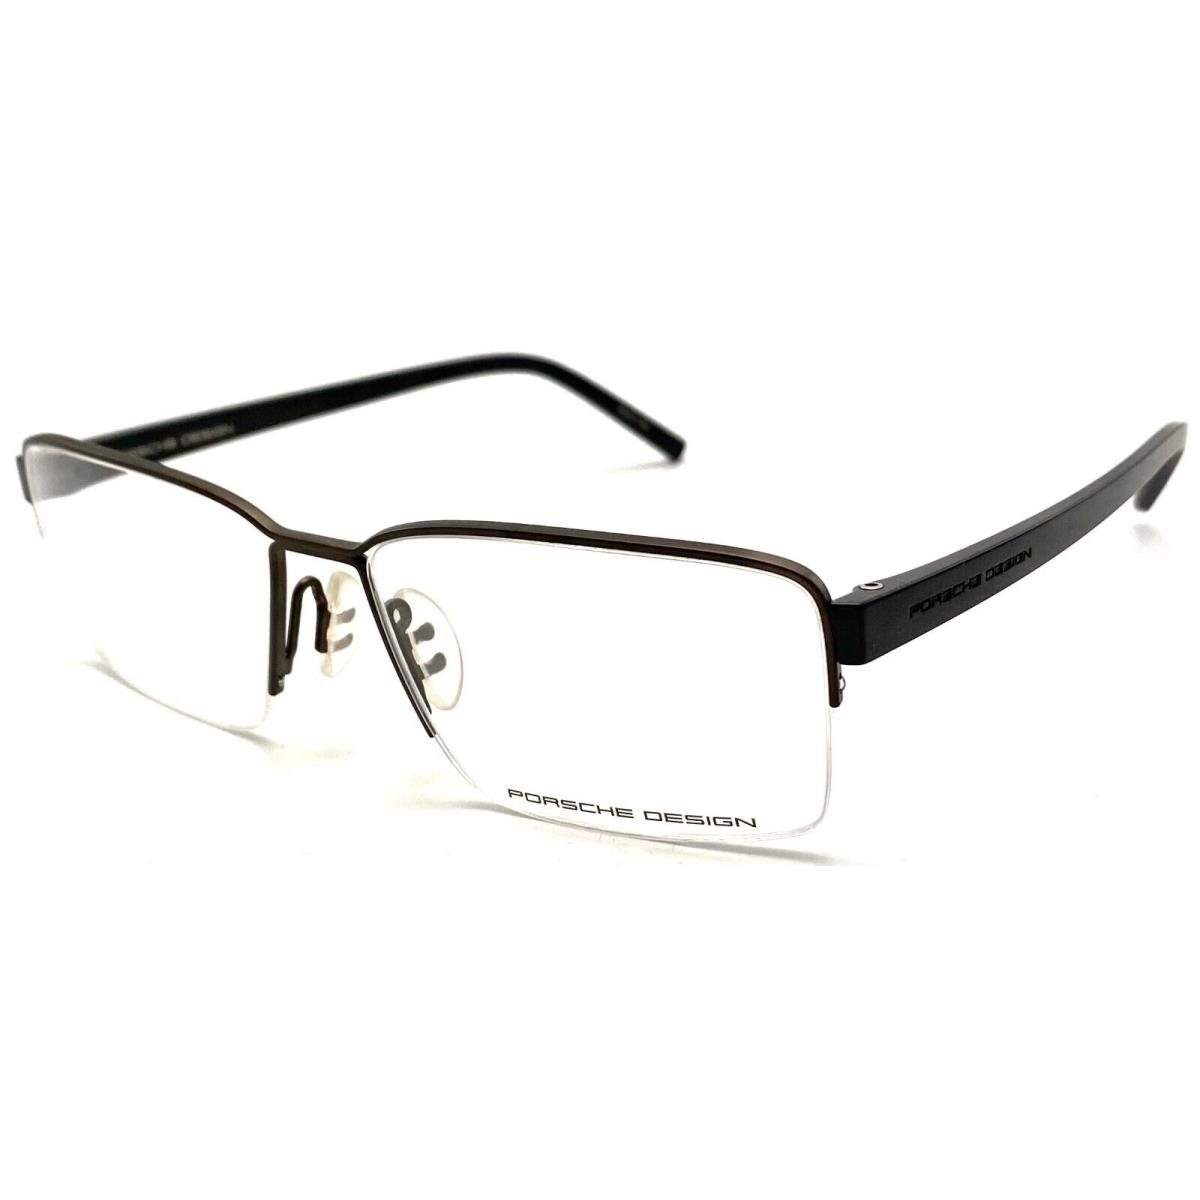 Porsche Design P351 C Bronze Eyeglasses Frame 54-15 140 W/case